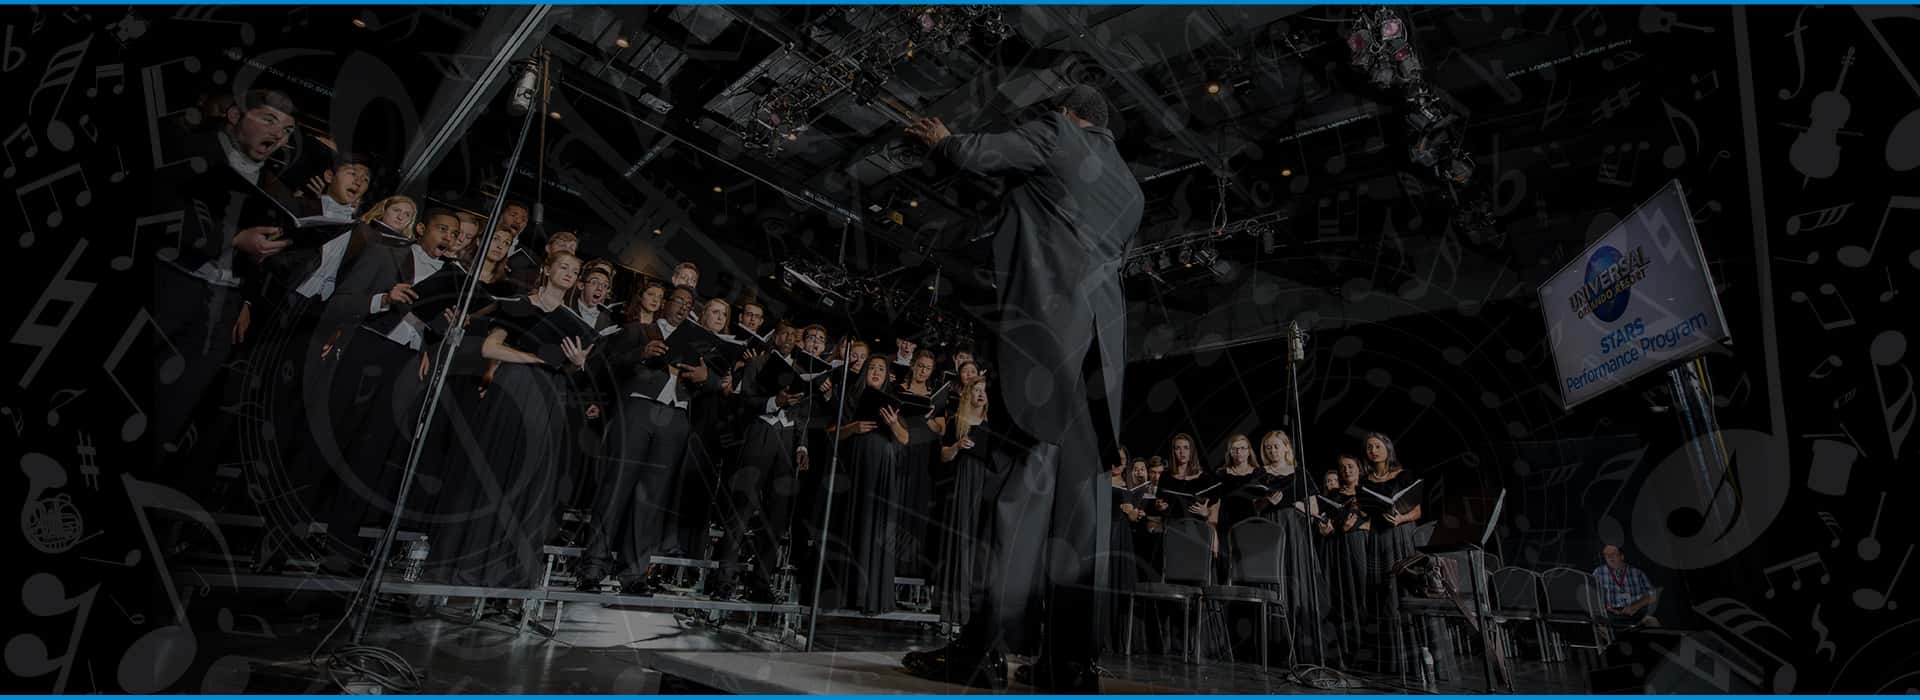 Universal Orlando Resort choir trips